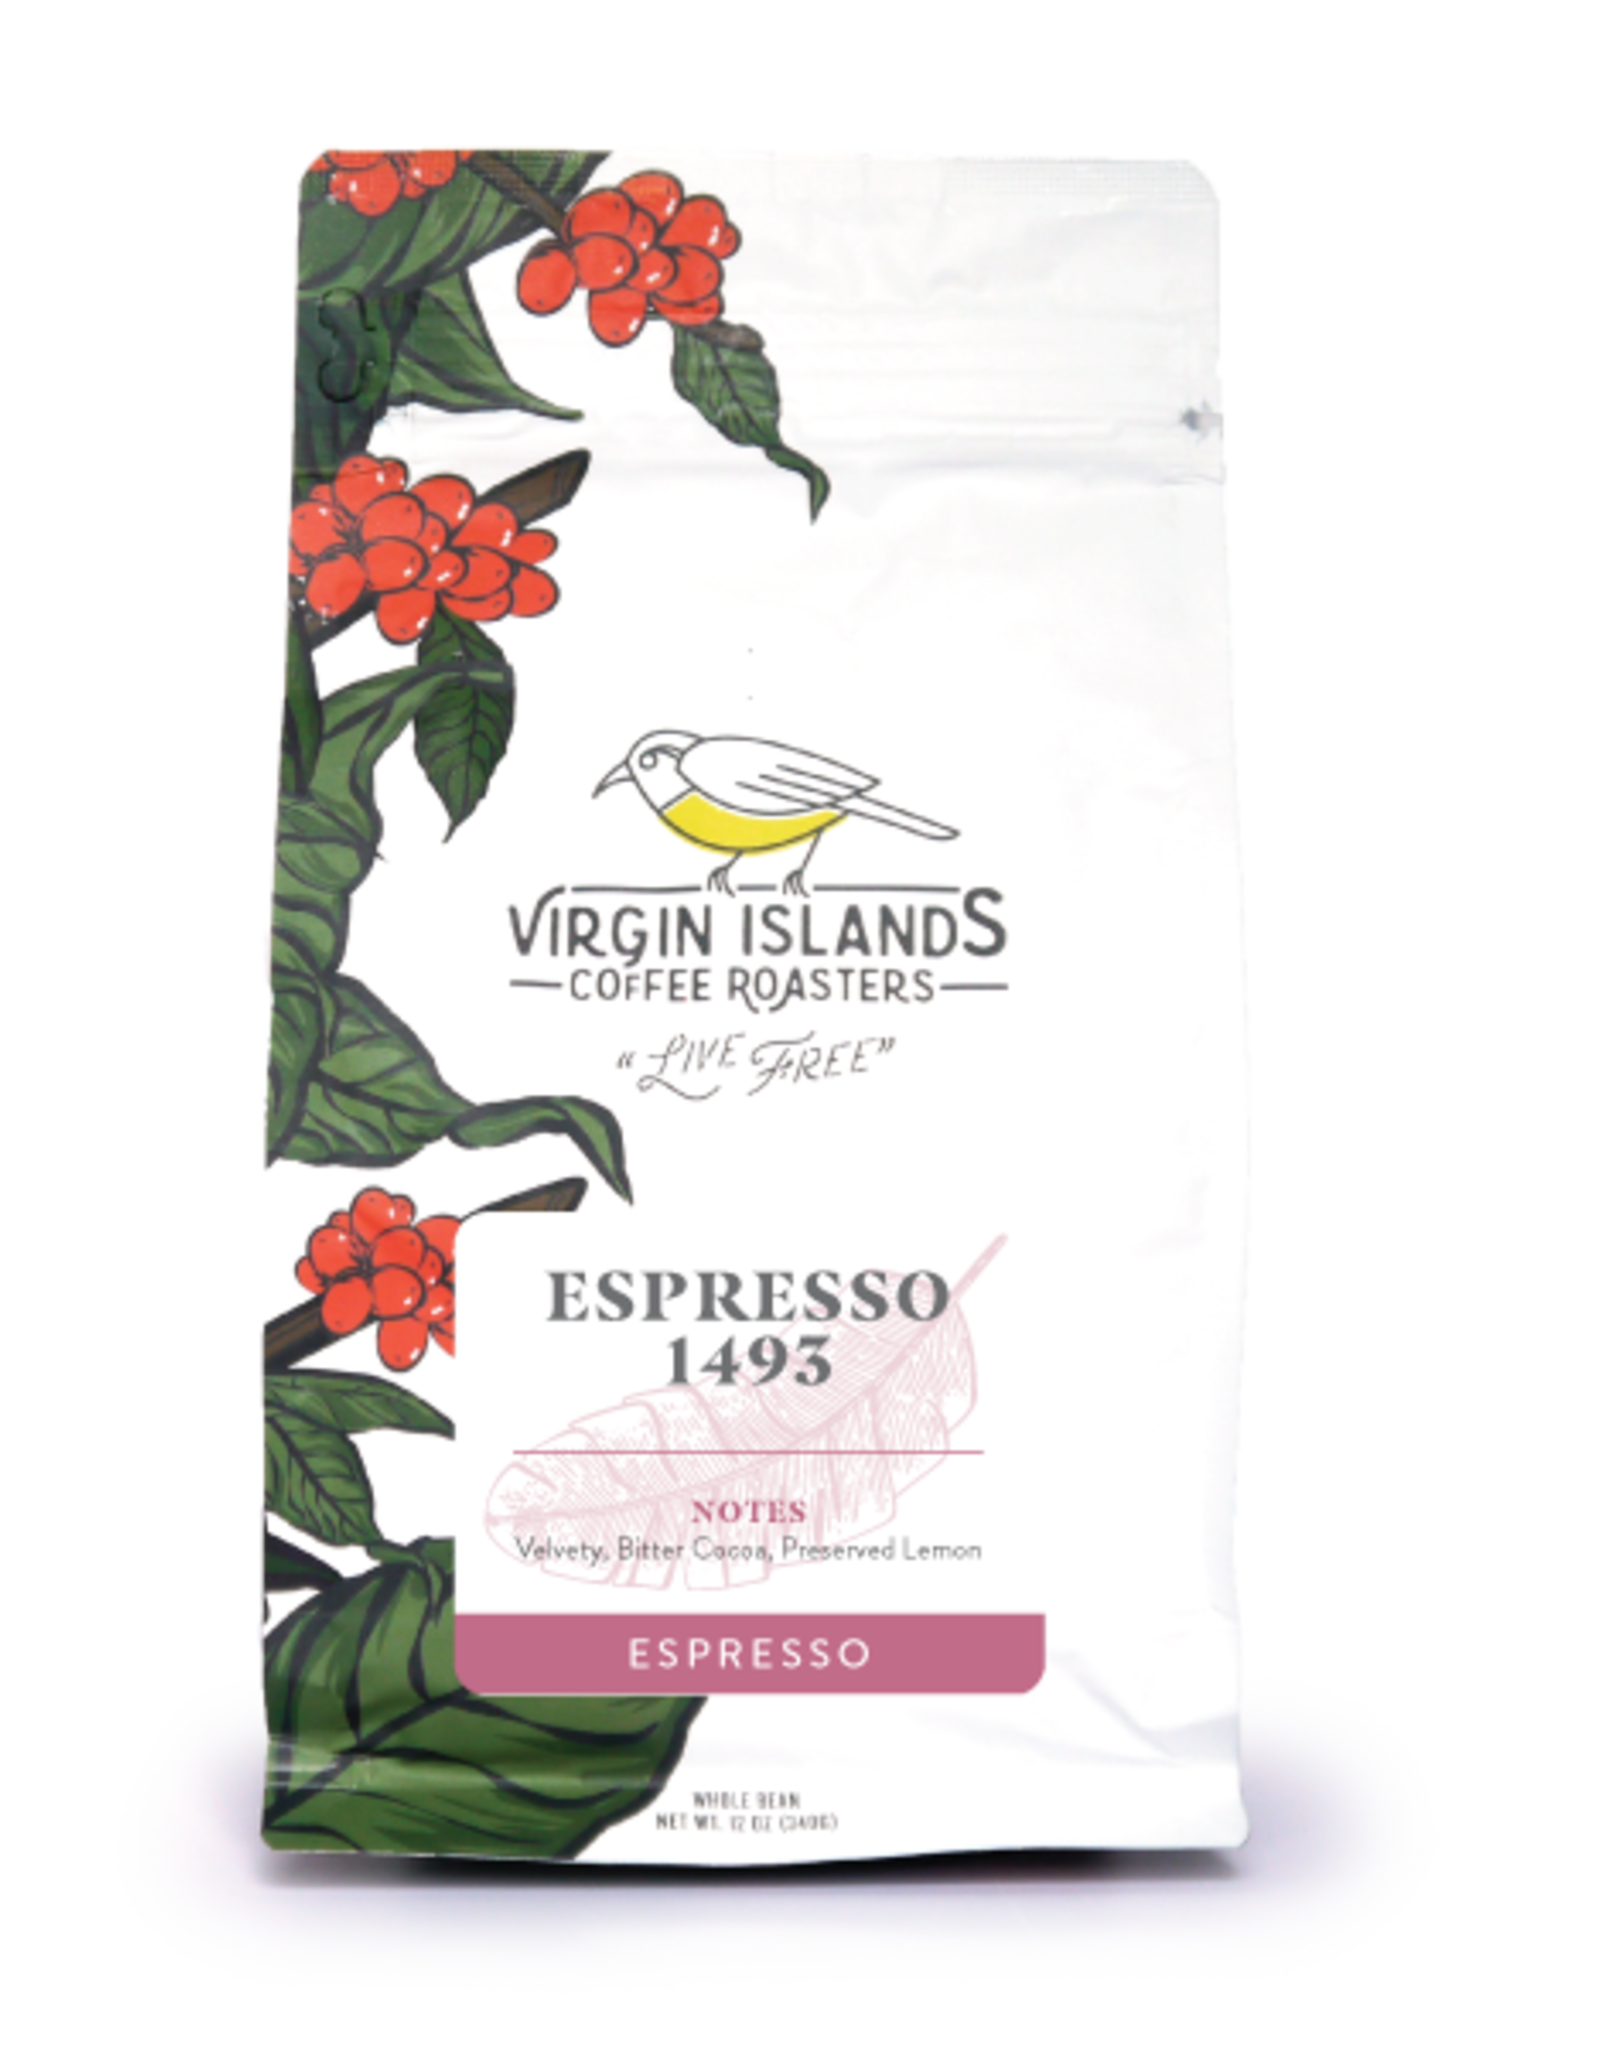 Virgin Islands Coffee Roasters VI Coffee Roasters - Espresso 1493 12 oz BEAN